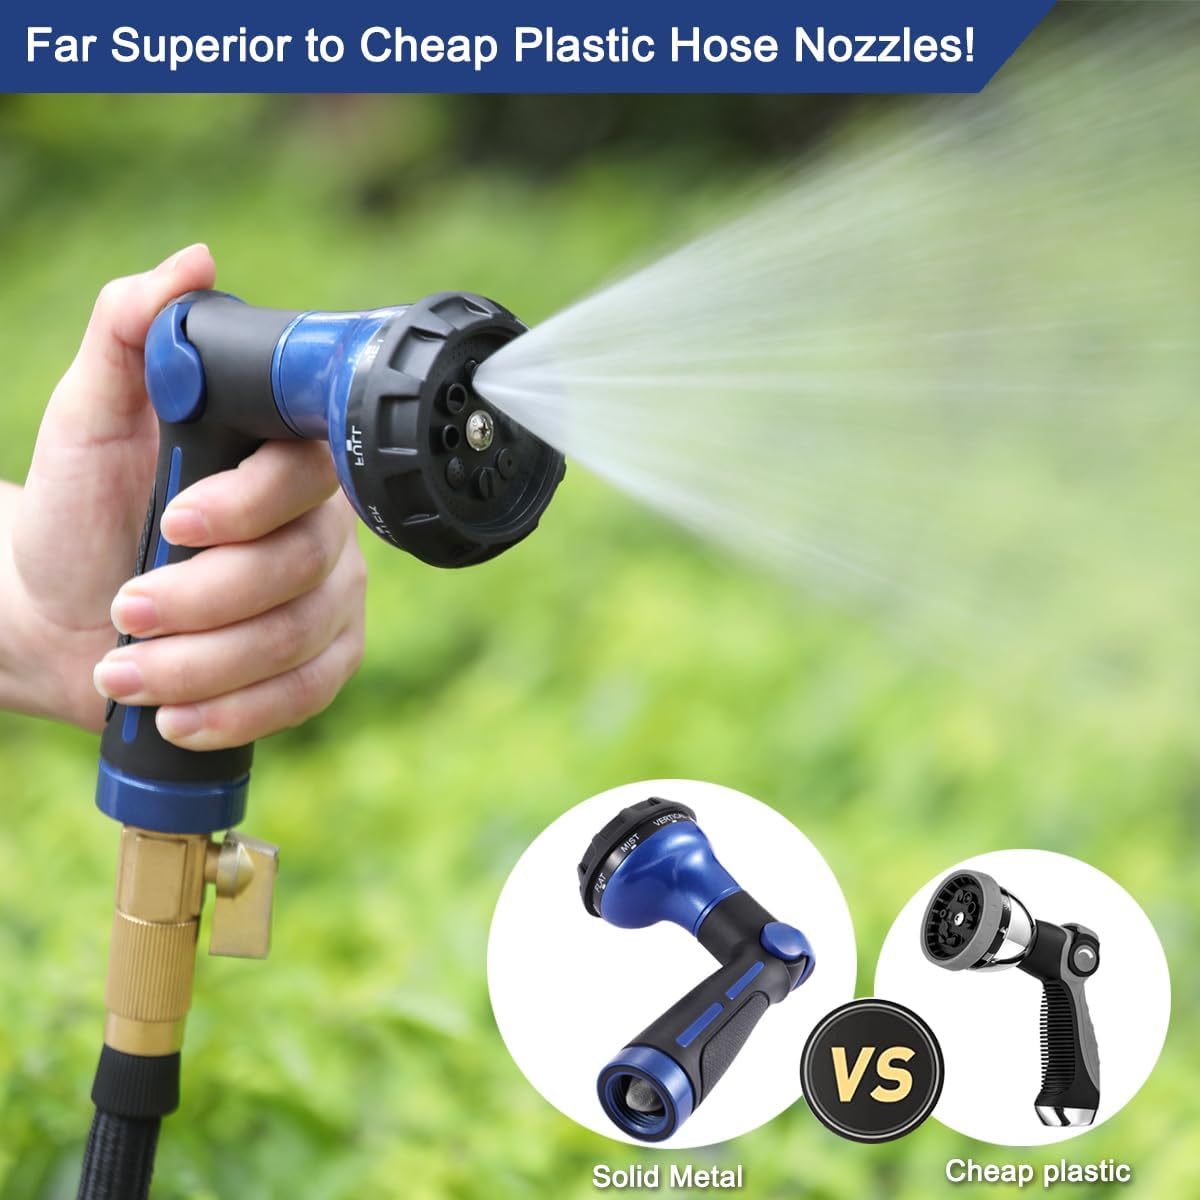 FANHAO Garden Hose Nozzle 100% Heavy Duty Metal Water Hose Sprayer with 8 Spray Patterns-Blue